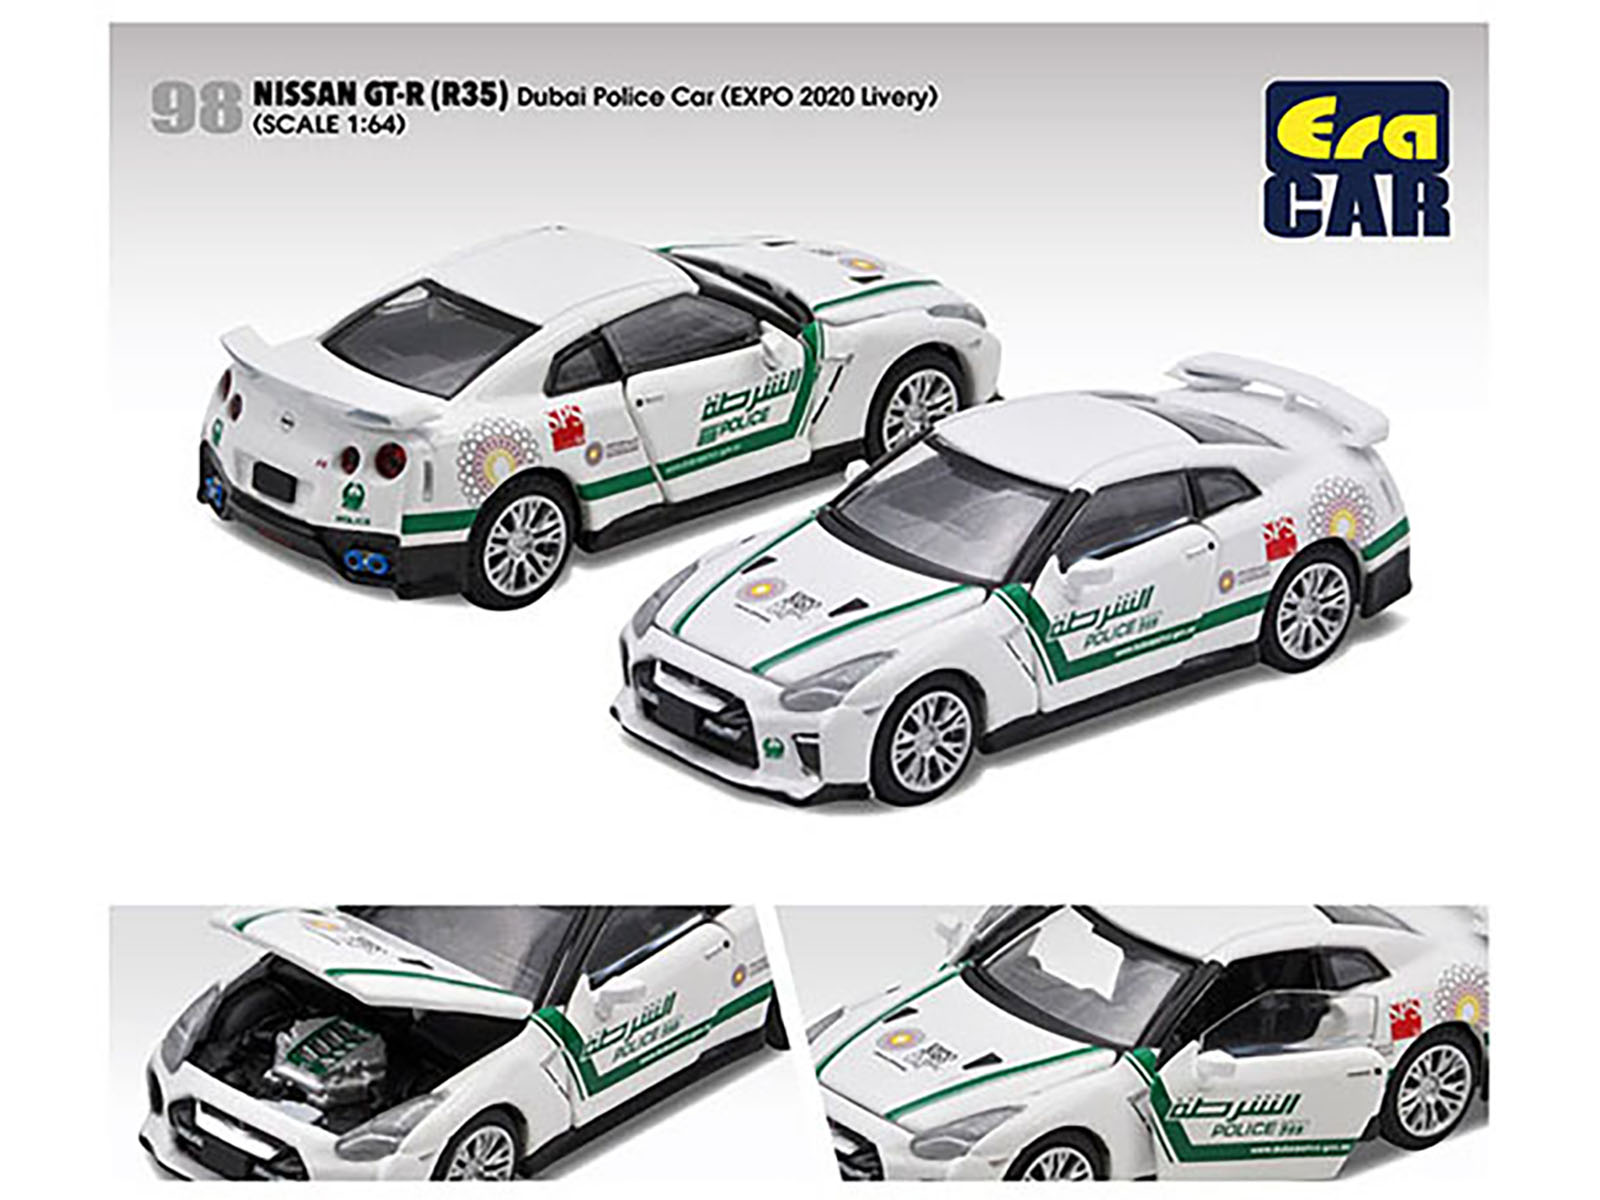 ERA CAR Nissan GT-R (R35) White Dubai Police "EXPO 2020" Livery Limited Edition to 720 pcs Worldwide 1/64 Diecast Model Car by Era Car